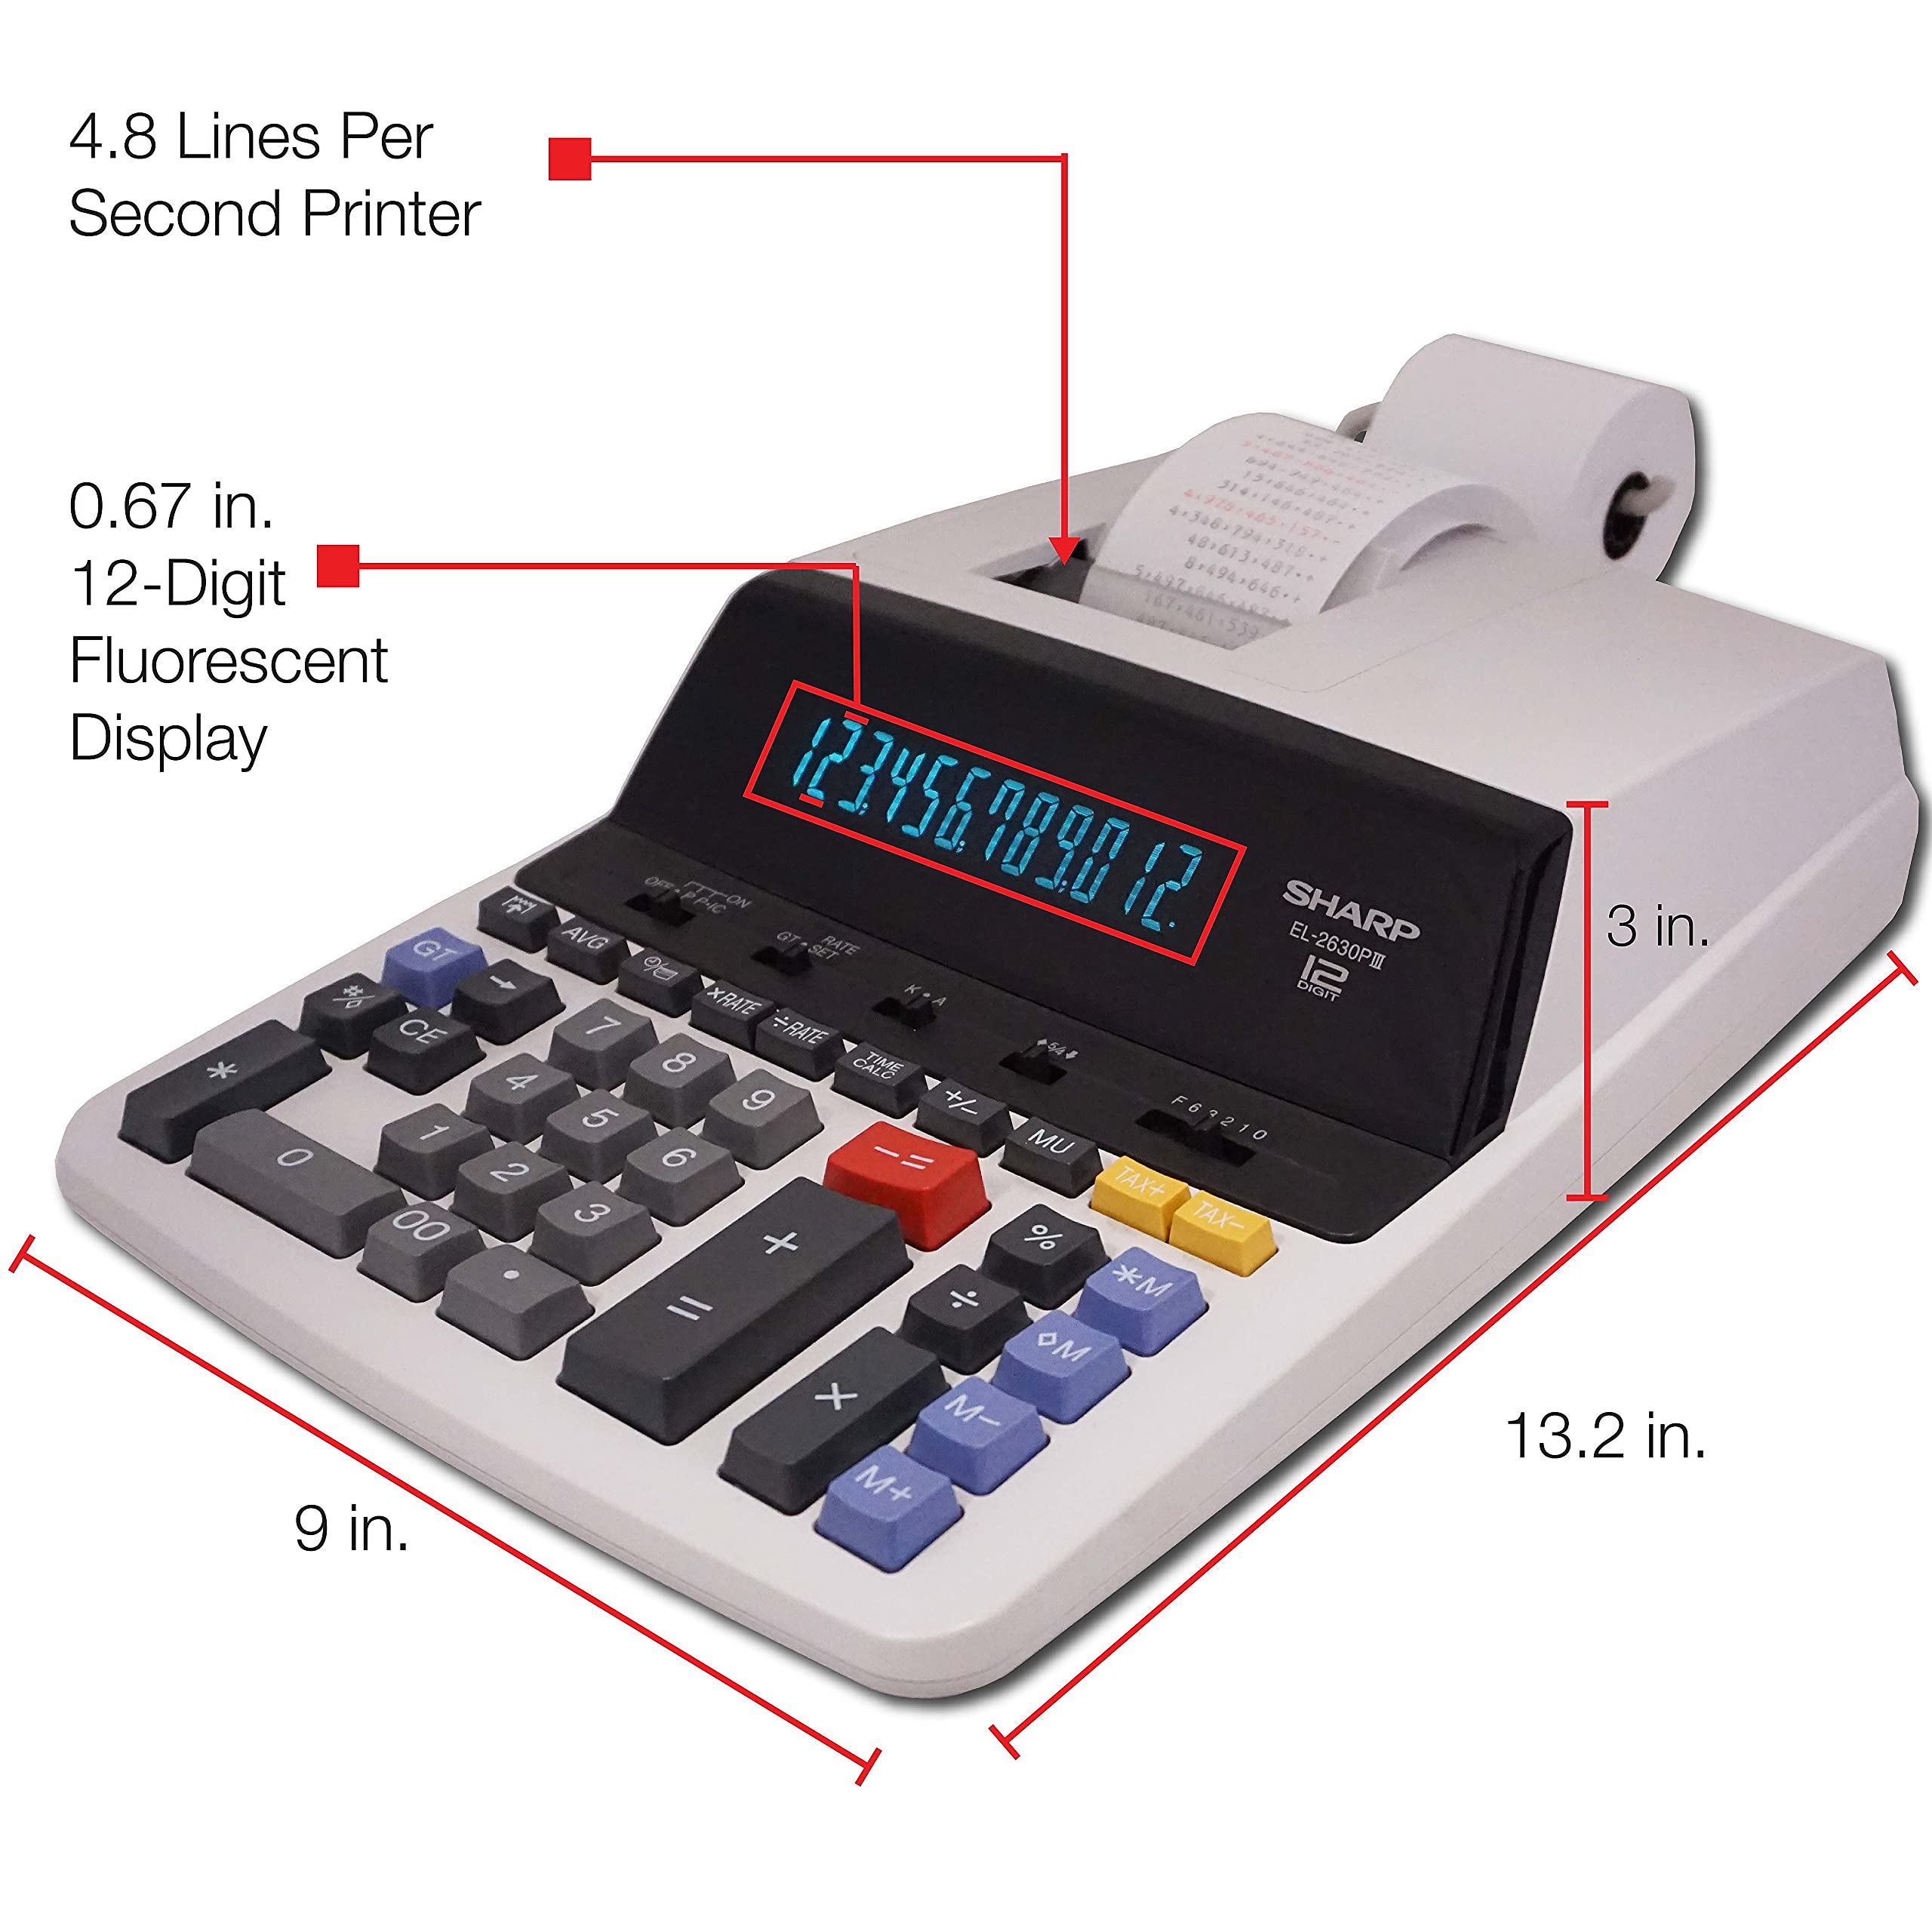 Sharp EL2630PIII EL2630PIII Two-Color Printing Calculator Black/Red Print 4.8 Lines/Sec